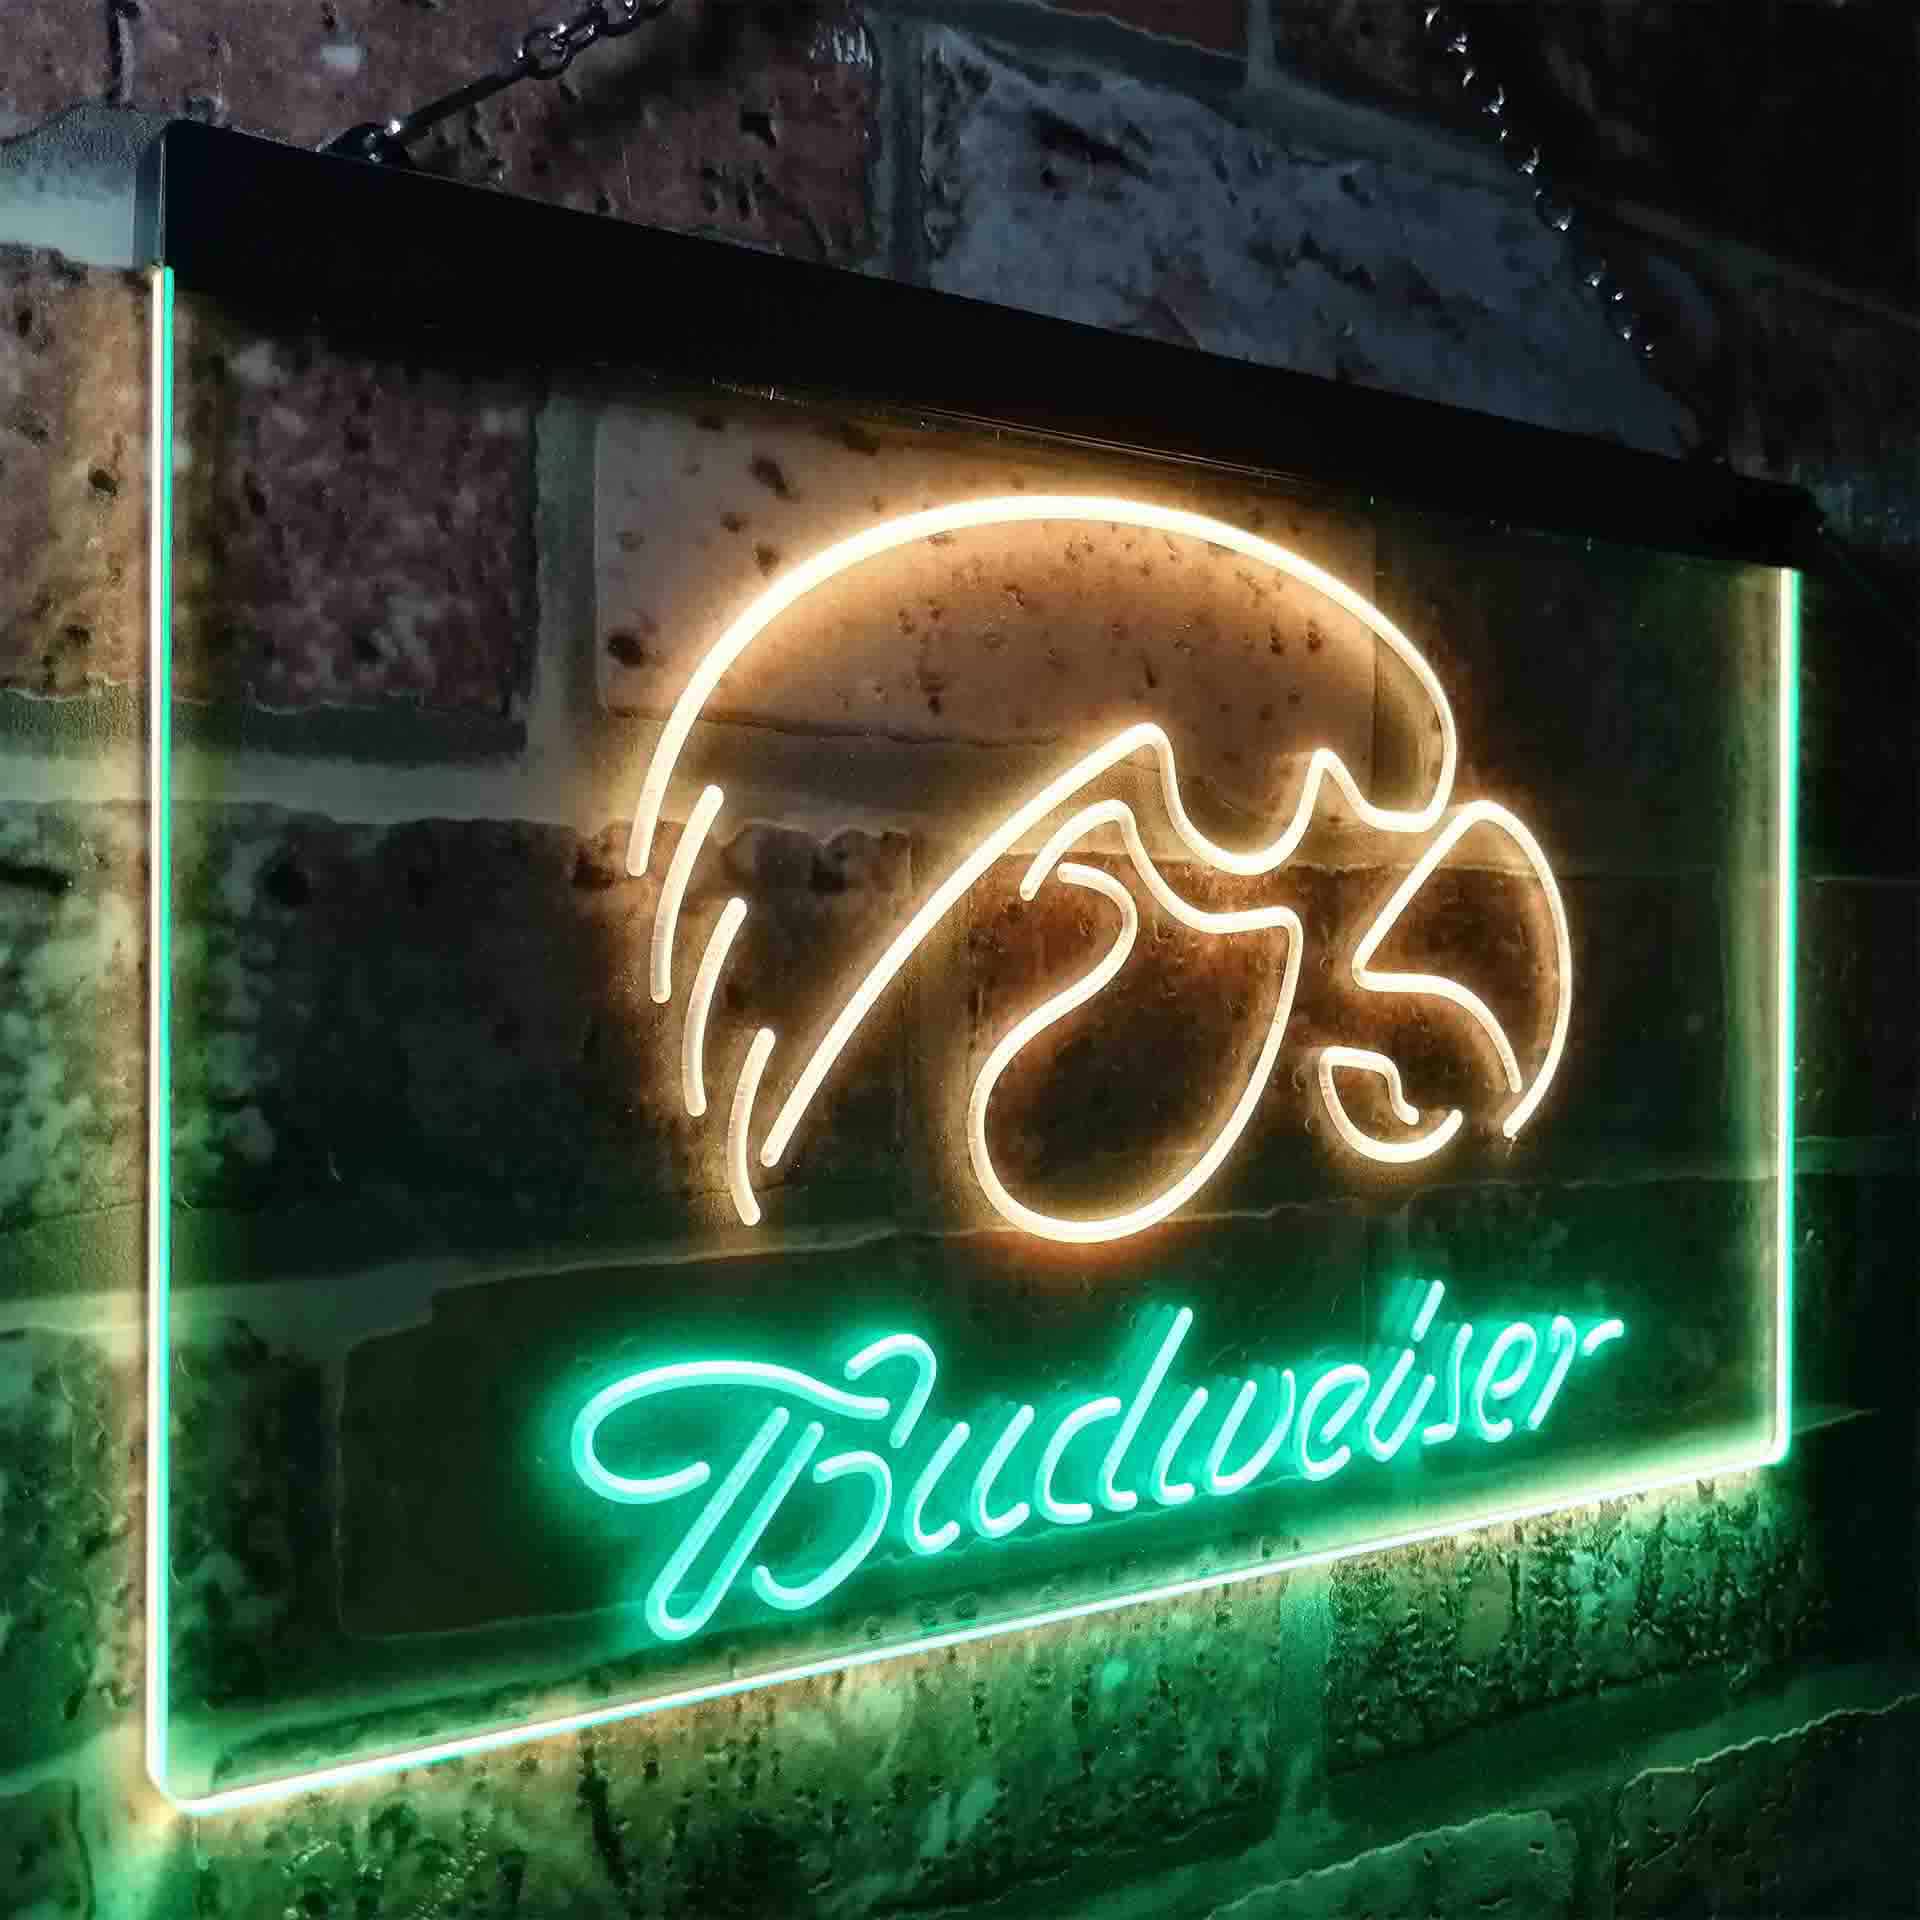 Budweiserss University Of Lowa Club Man Cave Neon Sign